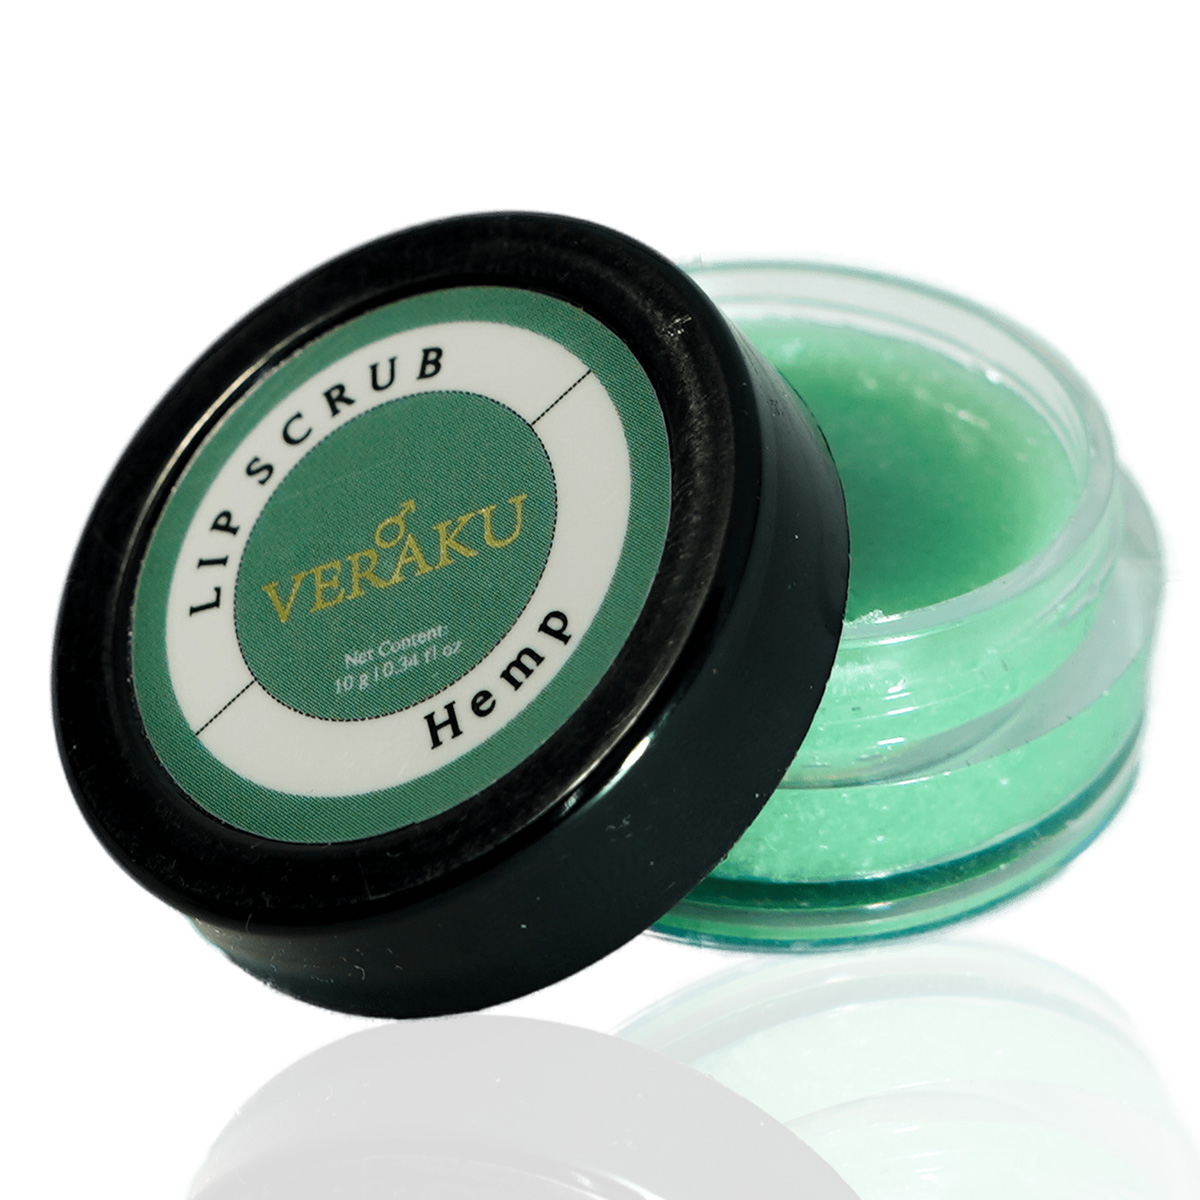 Veraku Lip Scrub For Men With Hemp Oil, 10gm